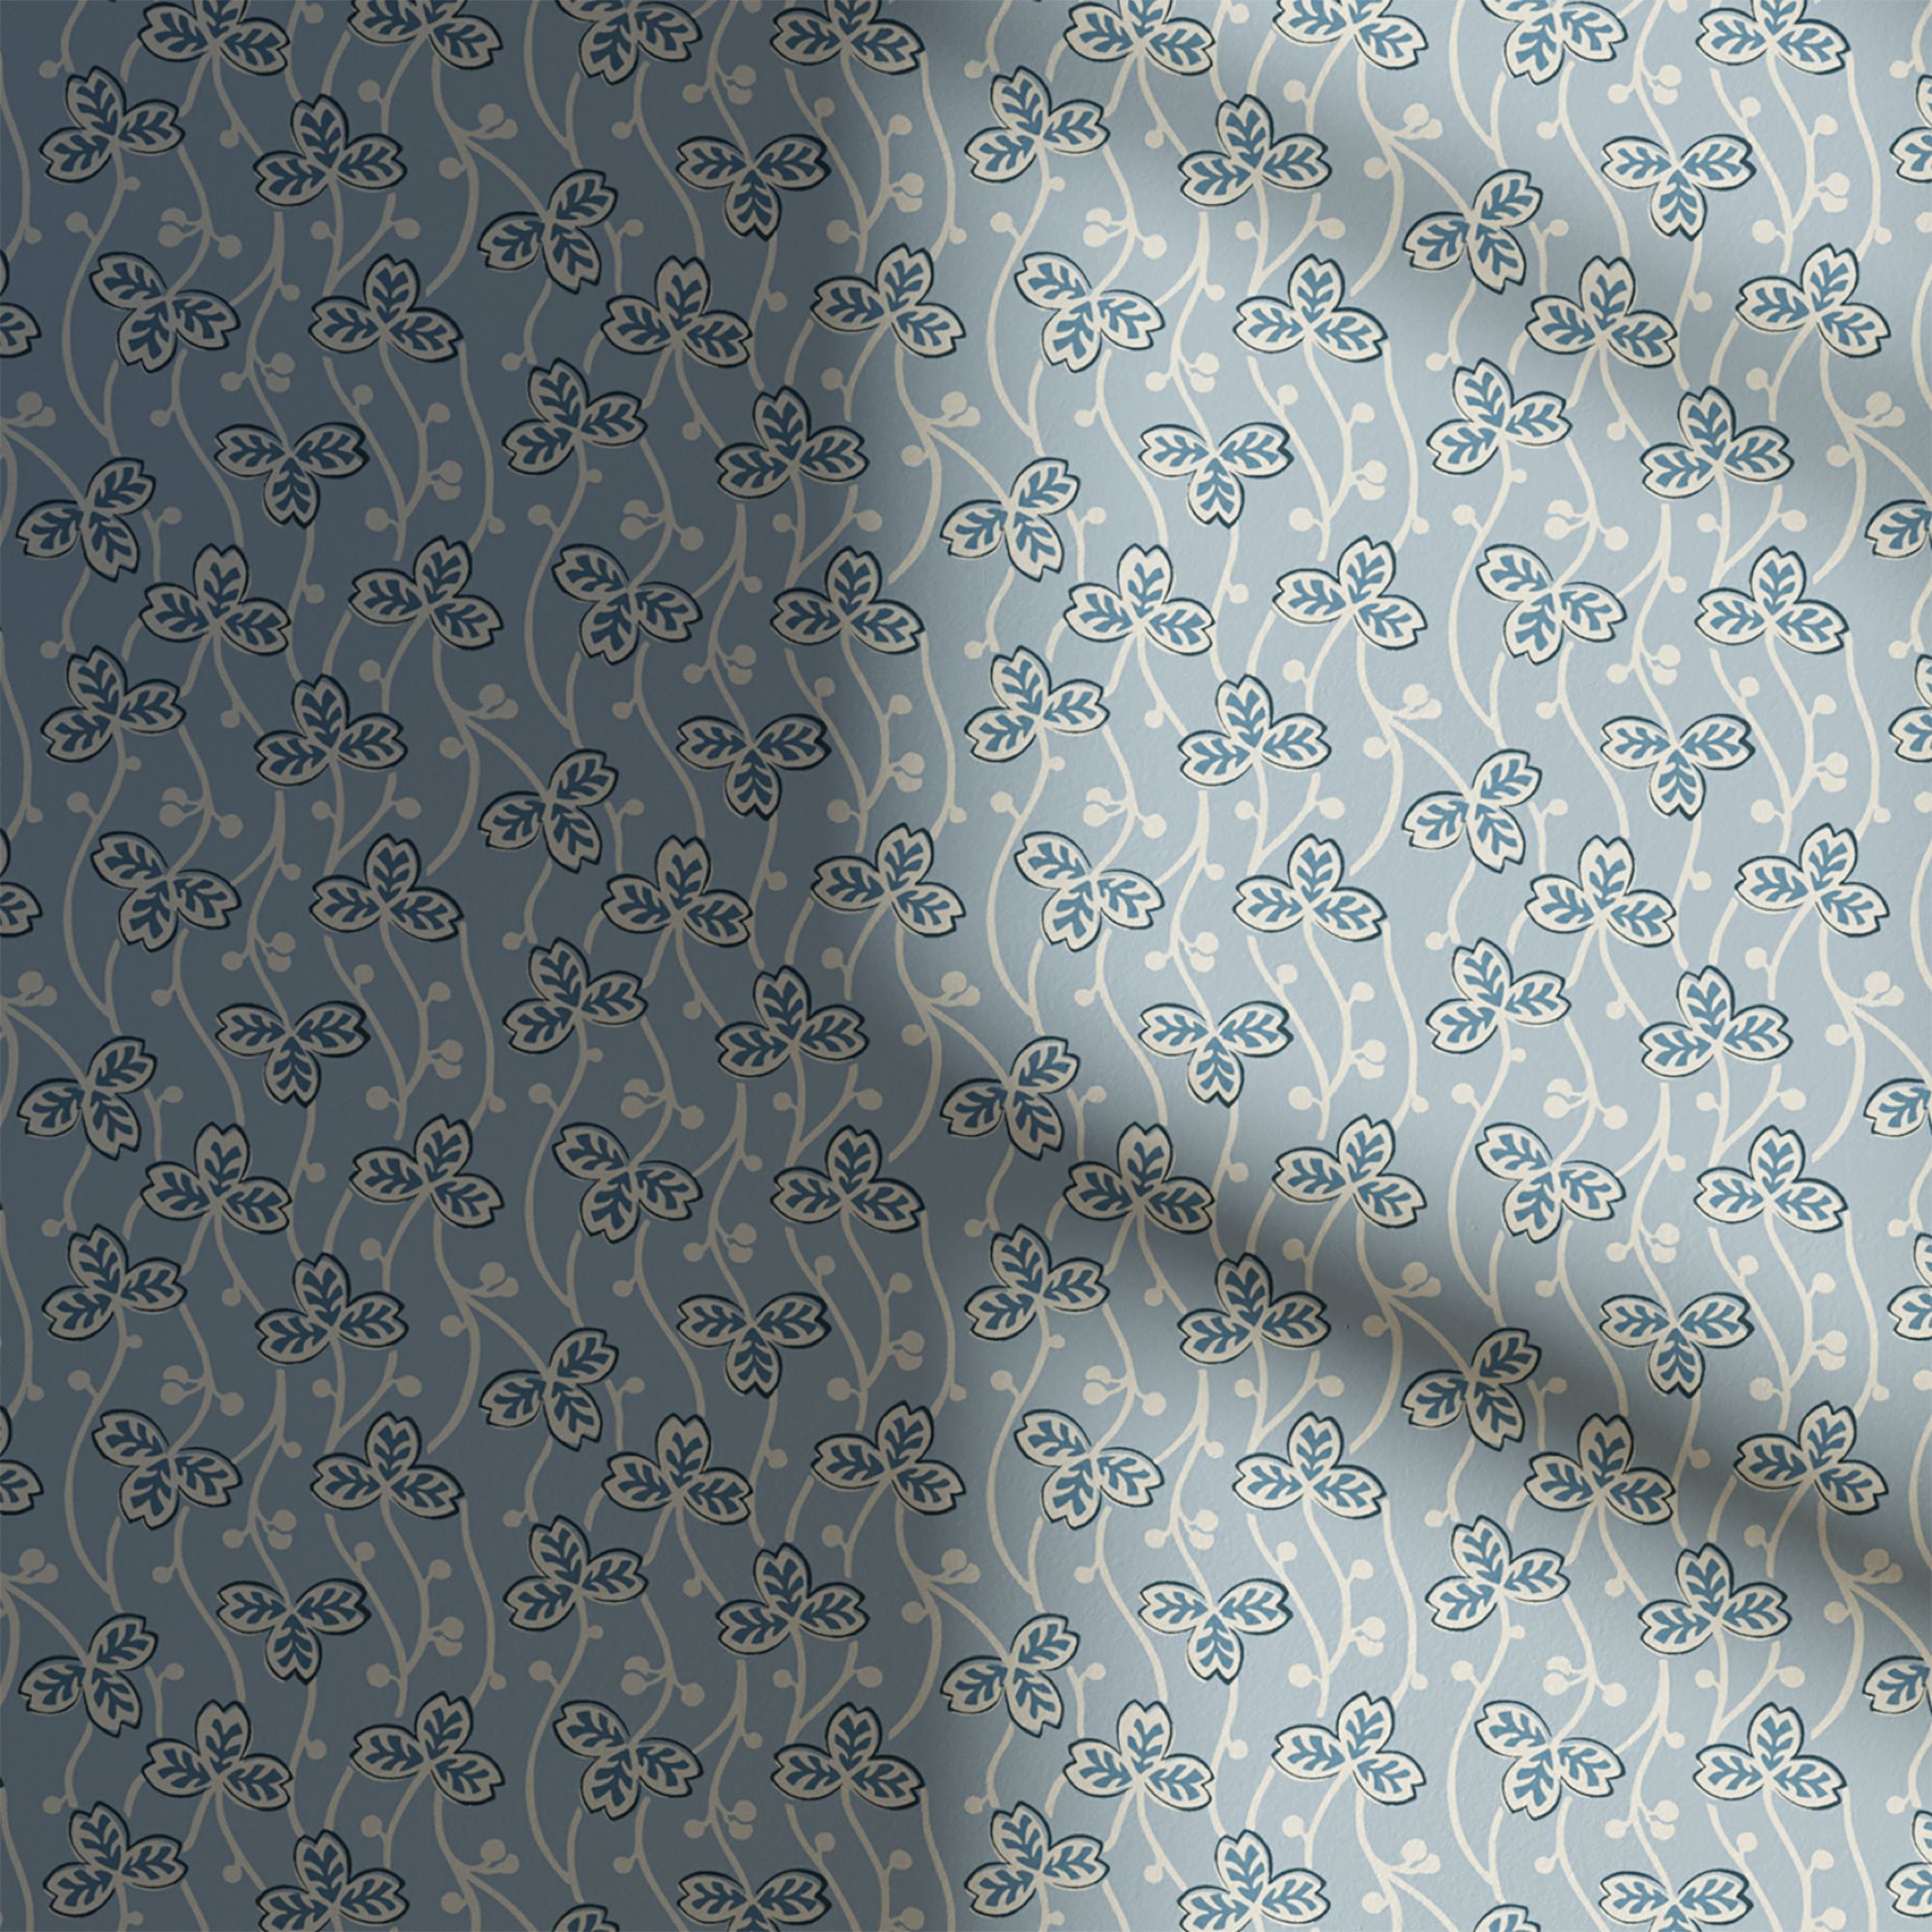 Lick Blue & White Clover 03 Textured Wallpaper | DIY at B&Q